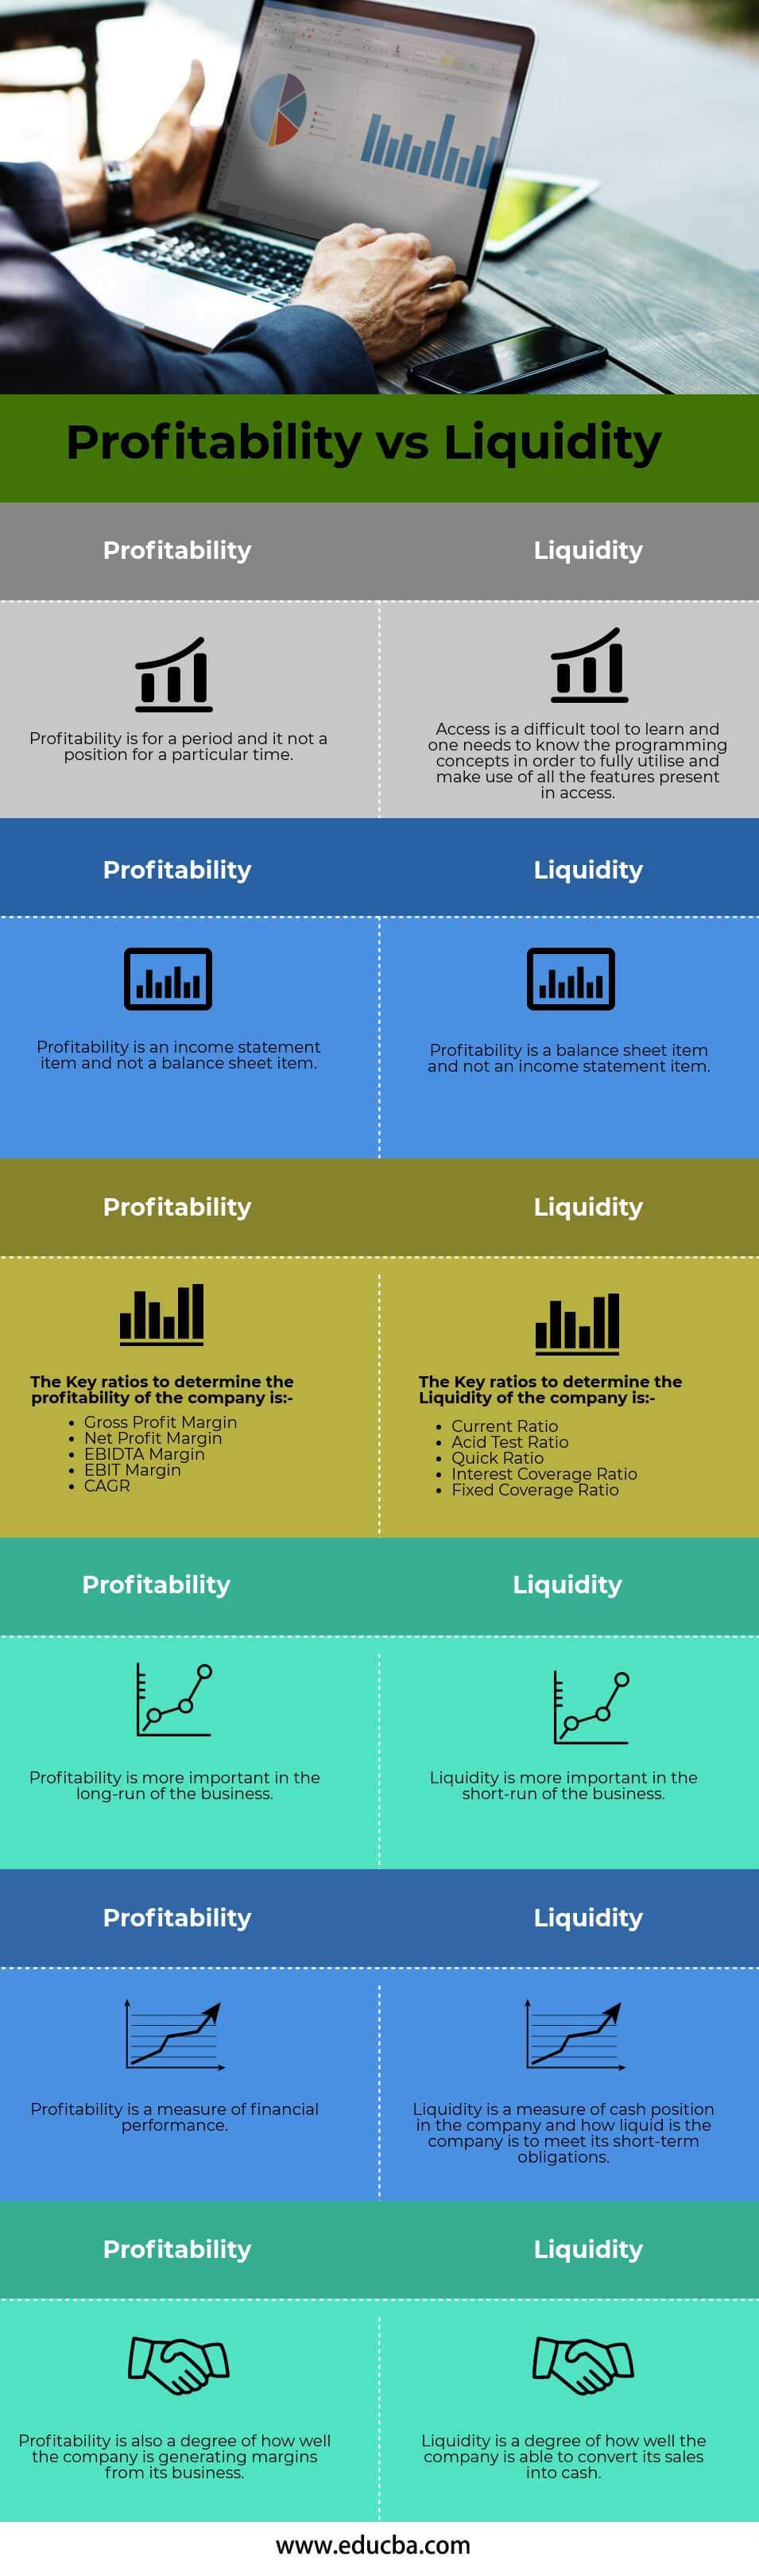 Profitability vs Liquidity (info)